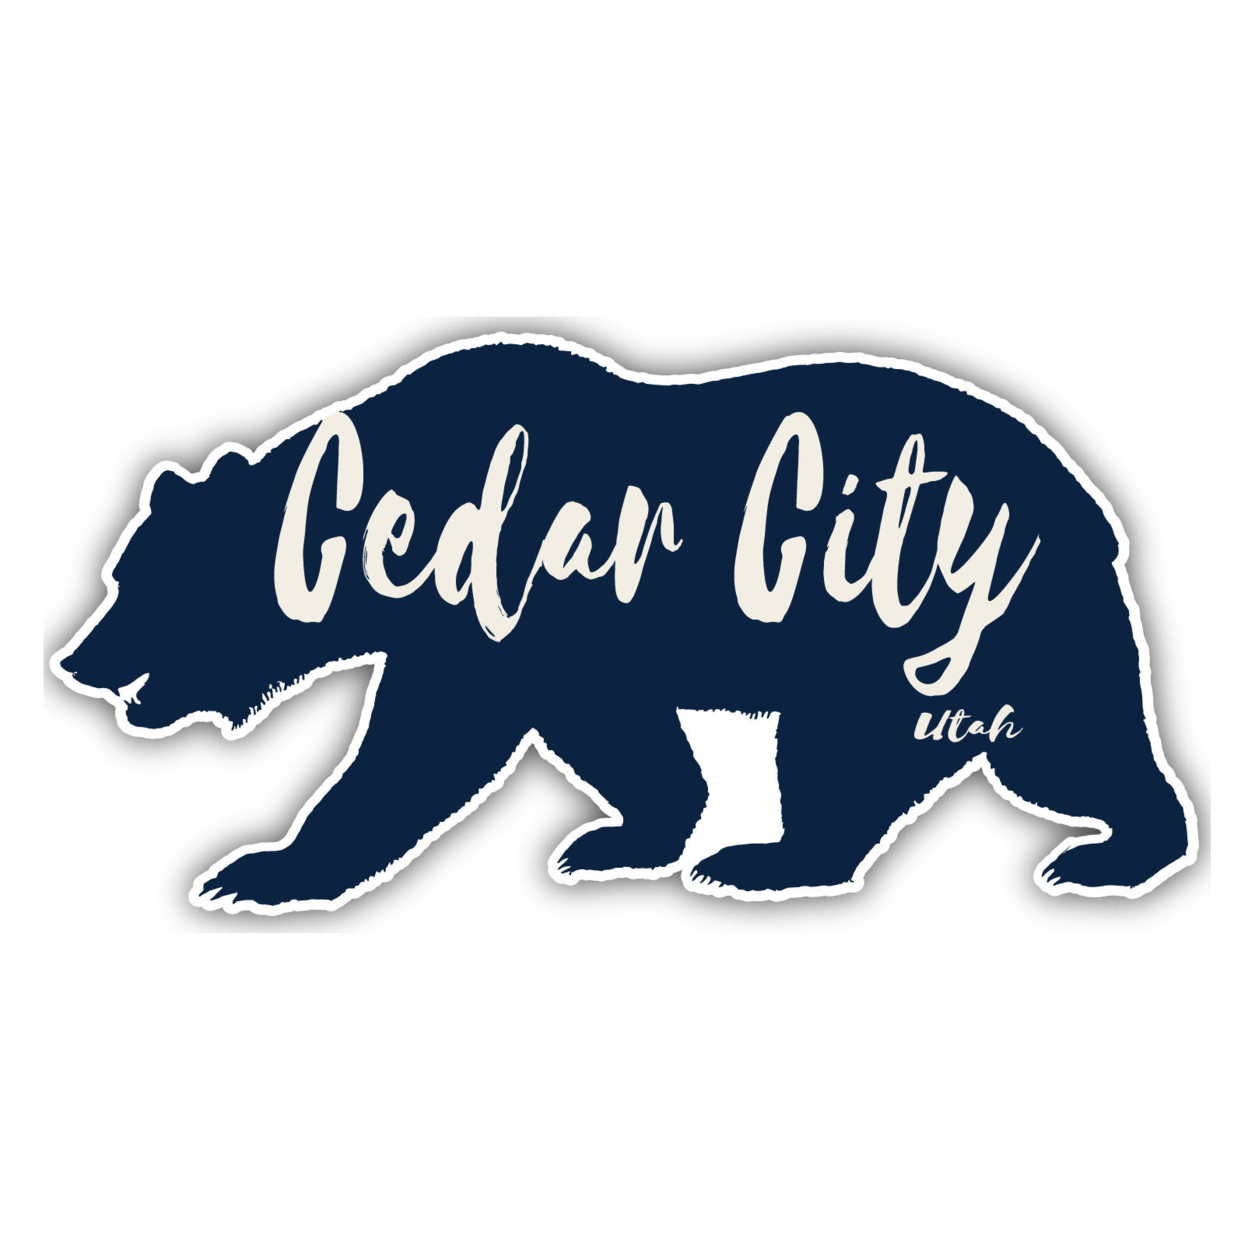 Cedar City Utah Souvenir Decorative Stickers (Choose Theme And Size) - Single Unit, 4-Inch, Bear